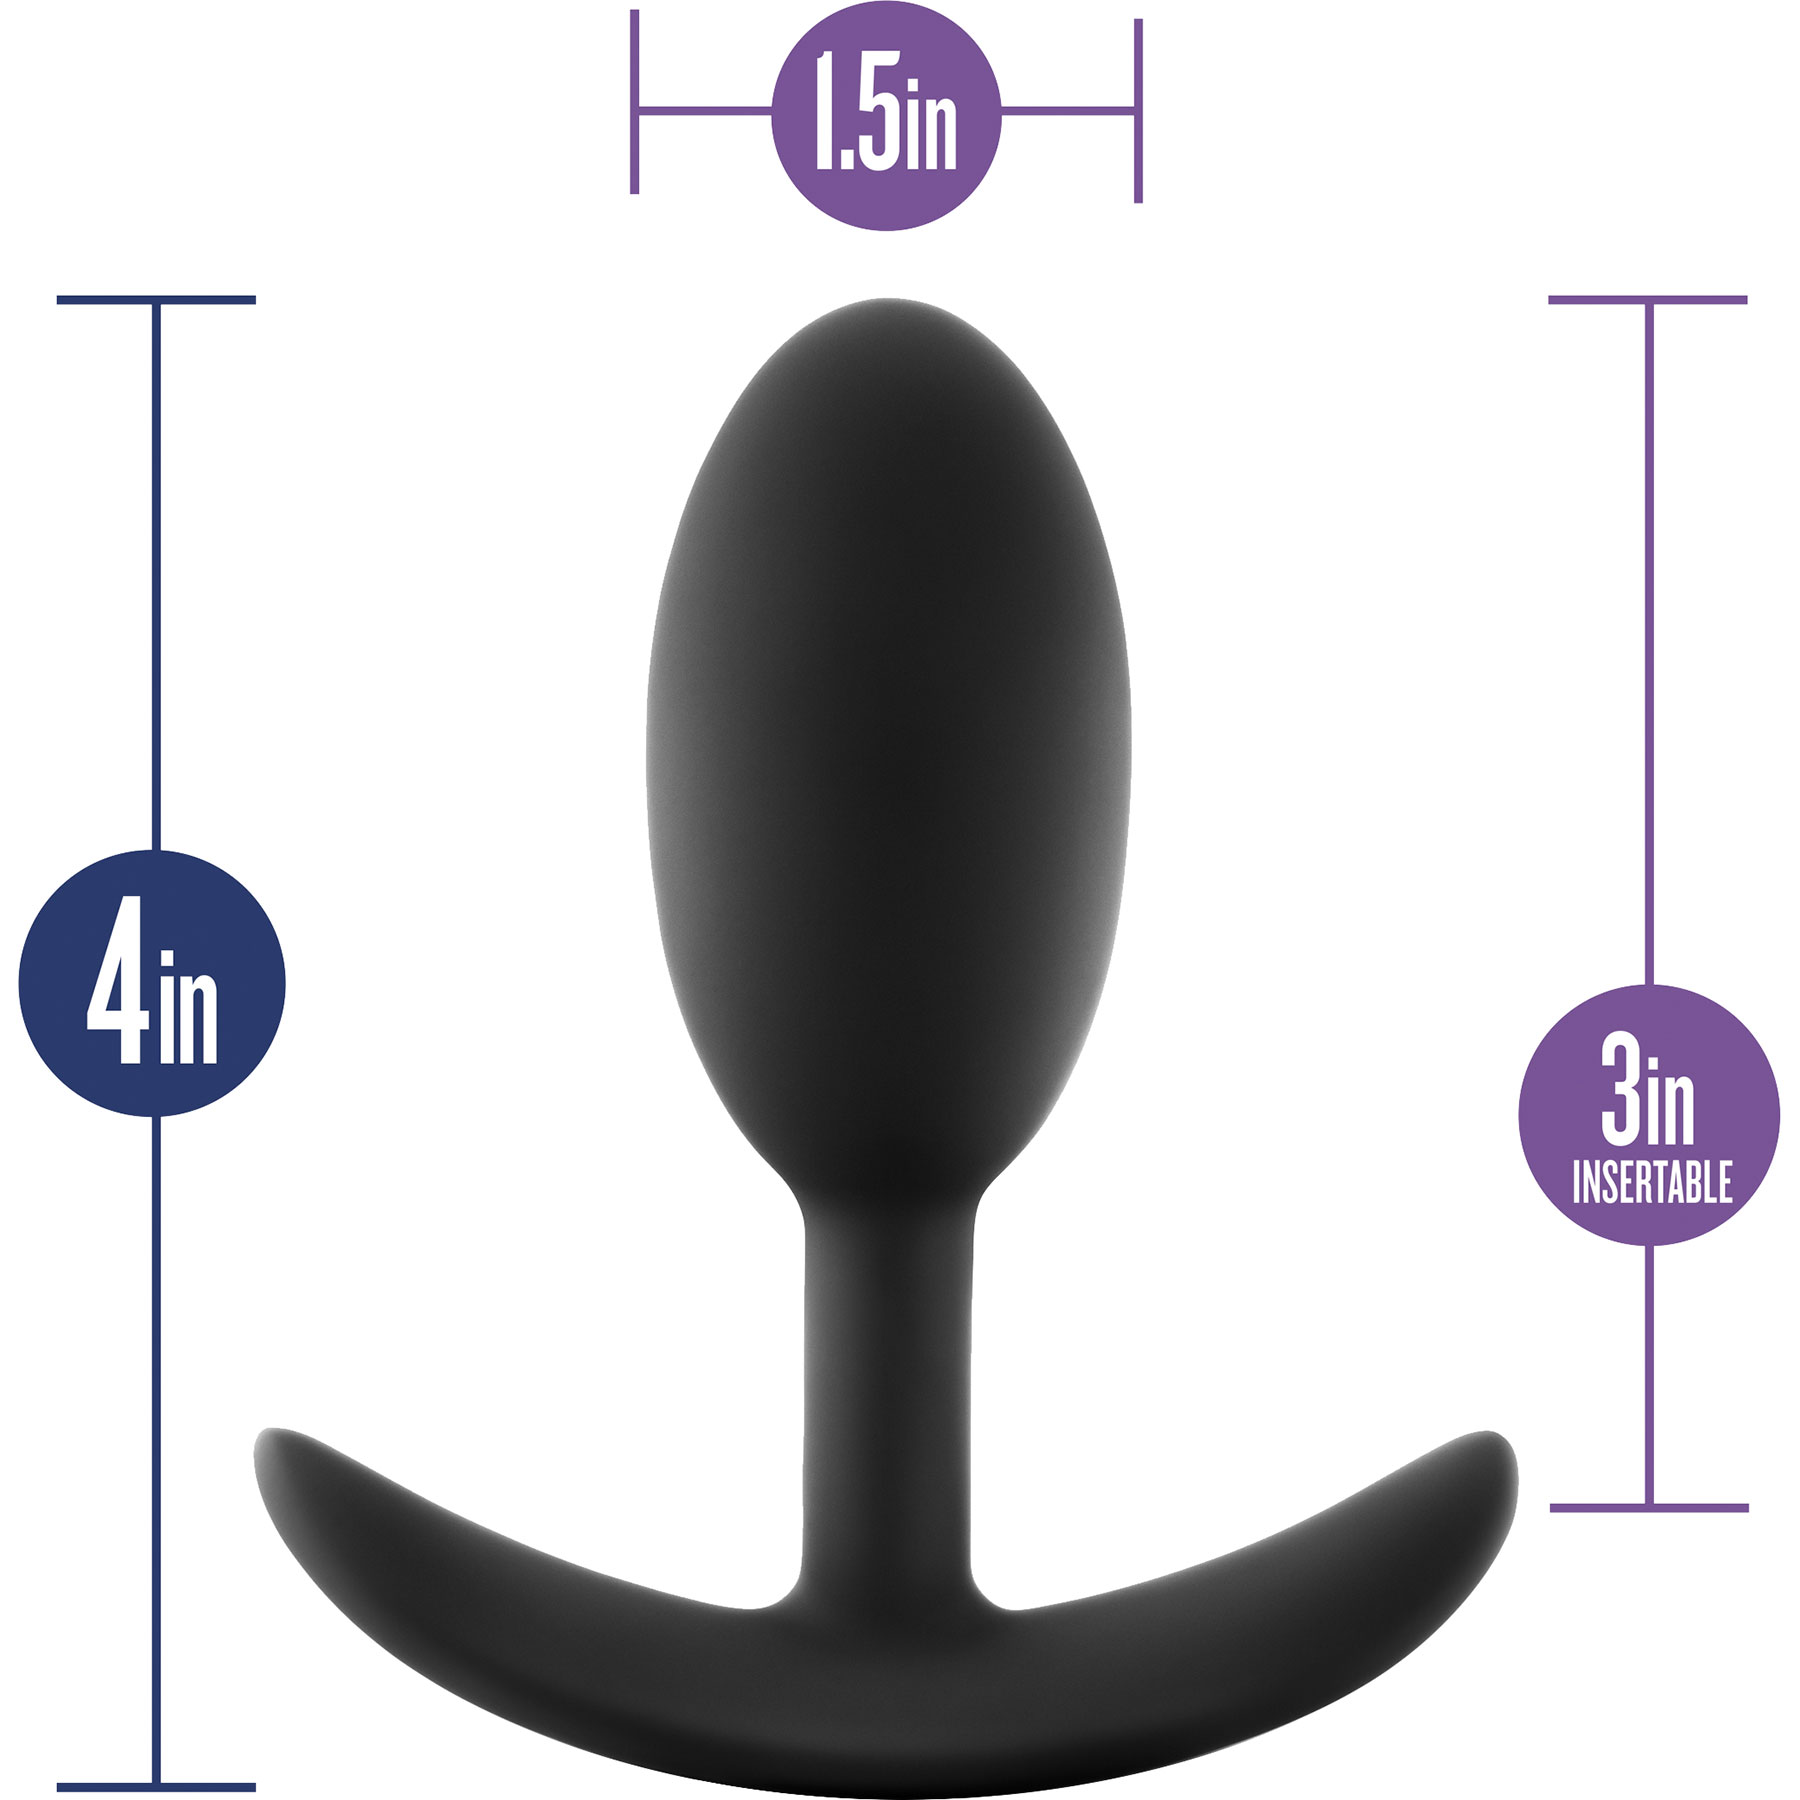 Luxe Wearable Silicone Vibra Slim Butt Plug by Blush, Medium - Measurements